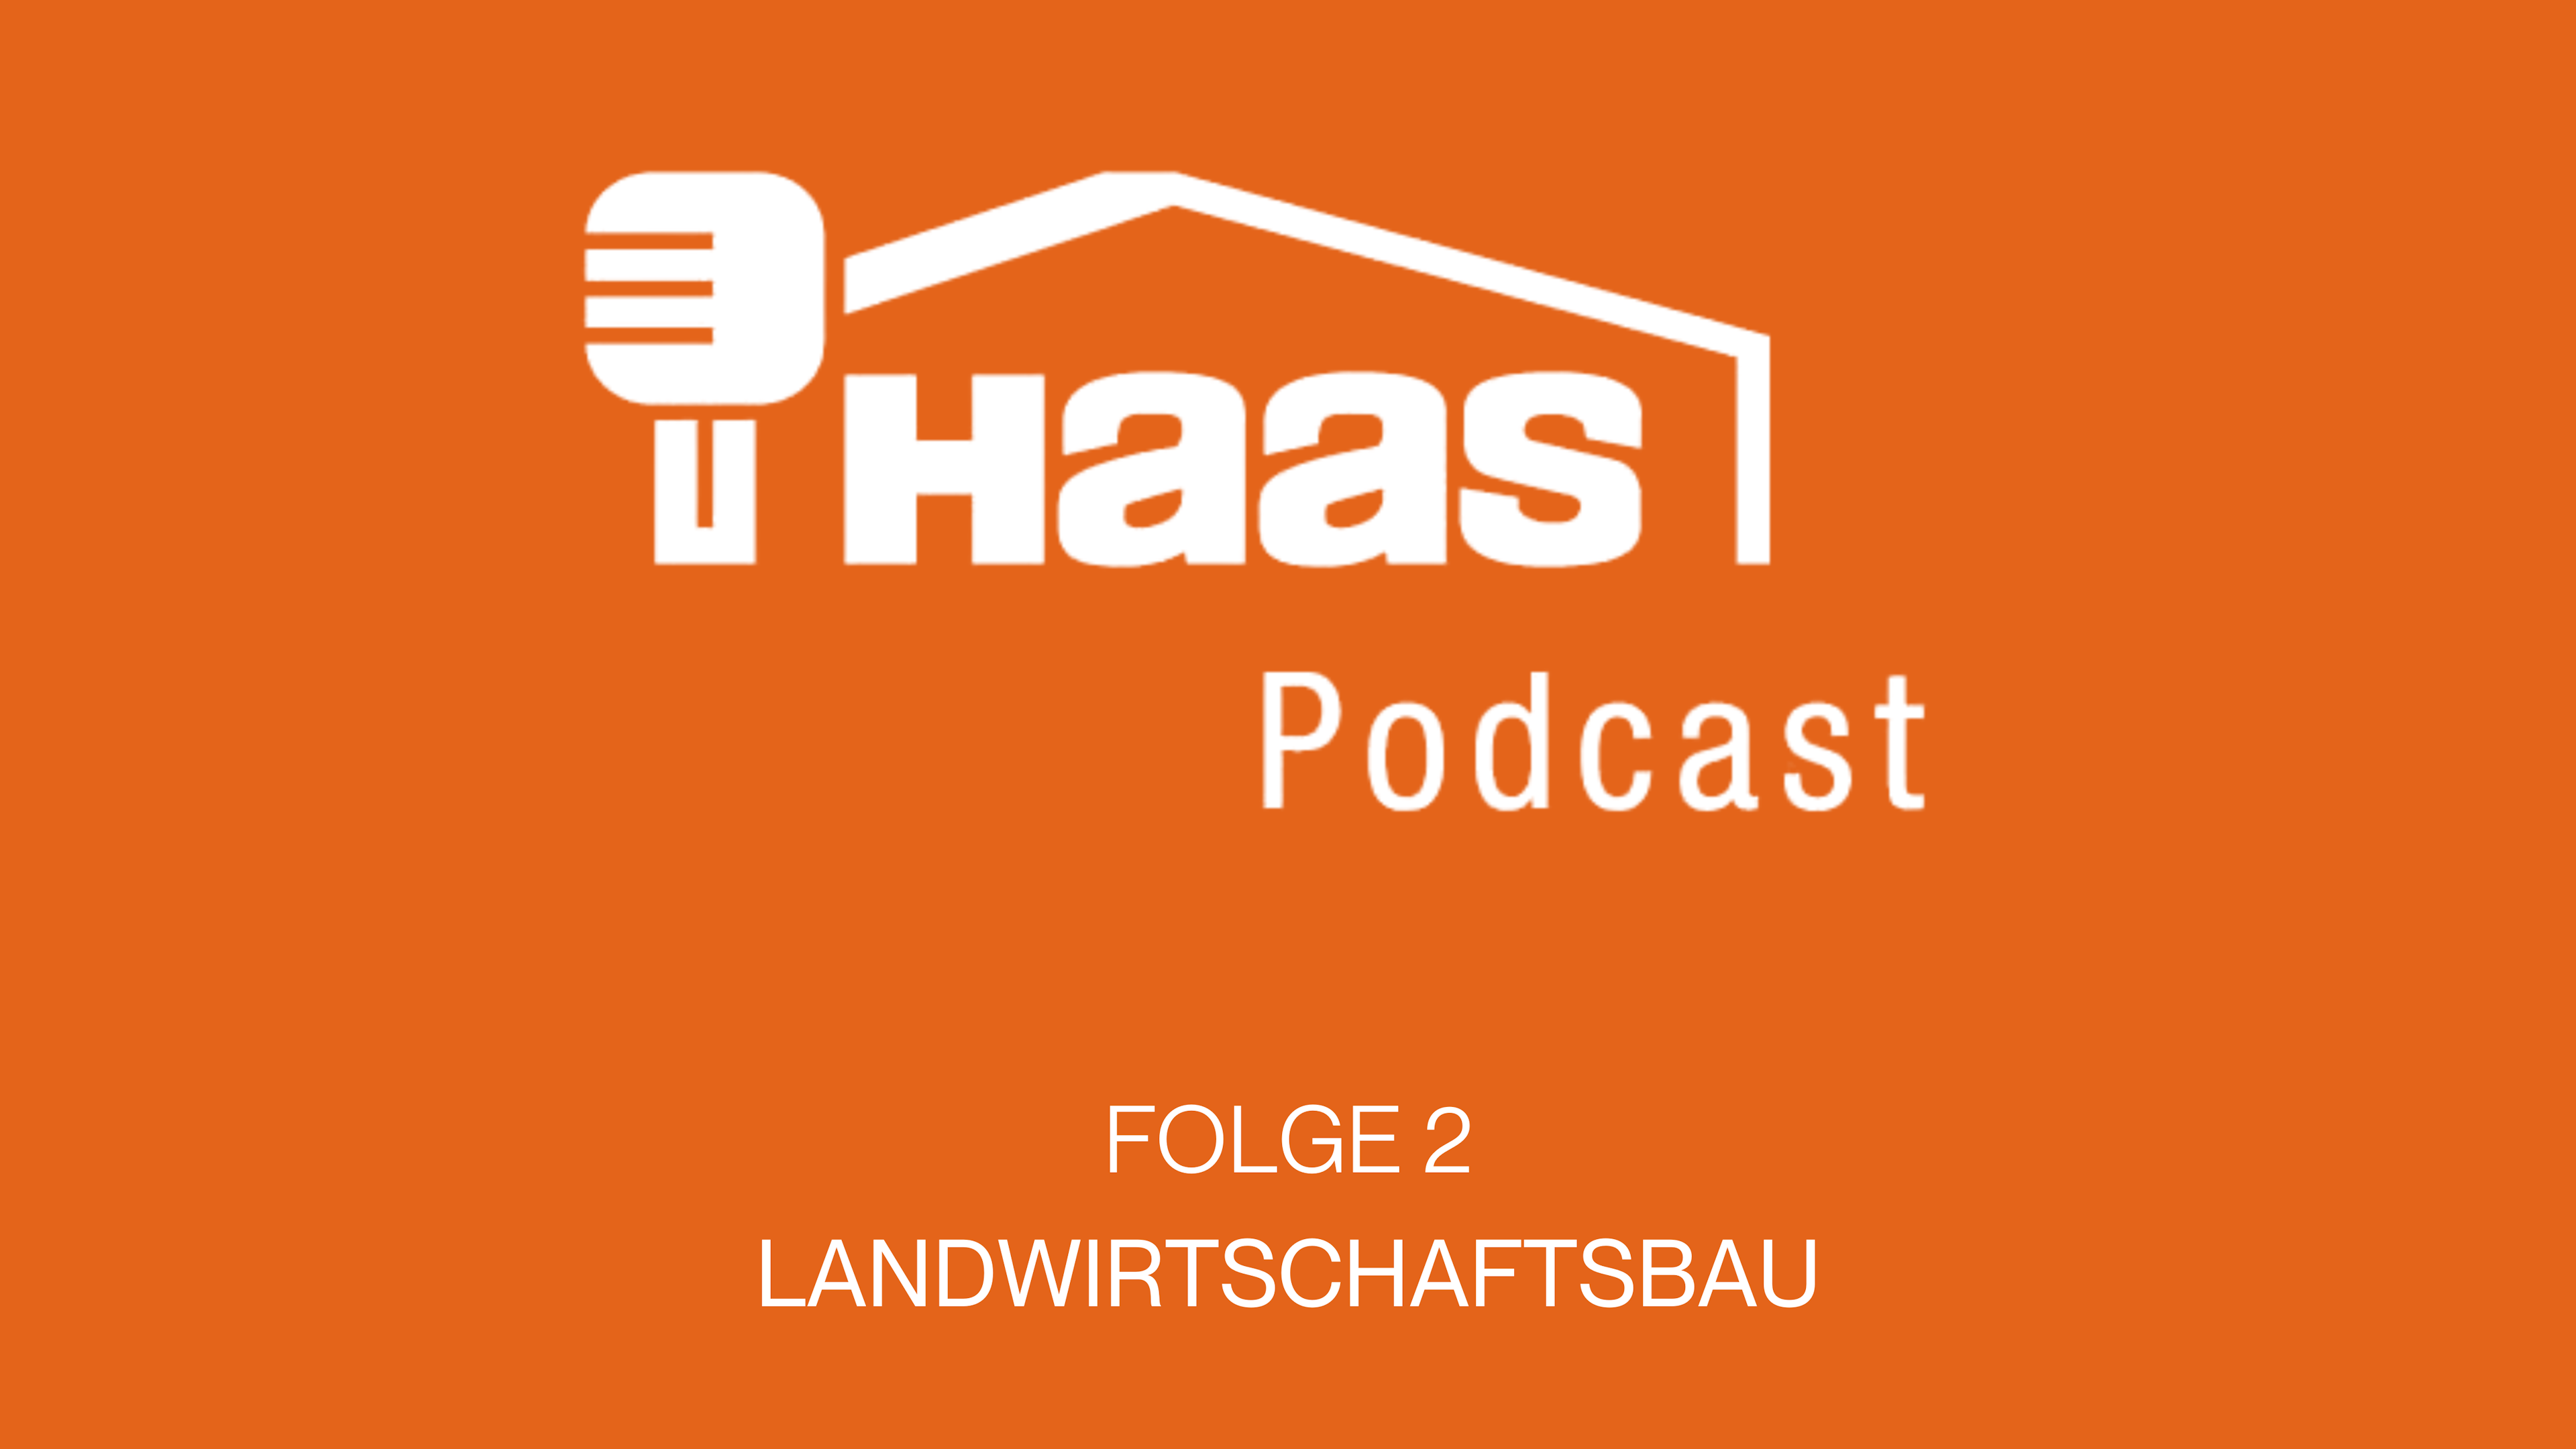 Haas Fertigbau Podcast aus einem Holz geschnitzt Folge 2